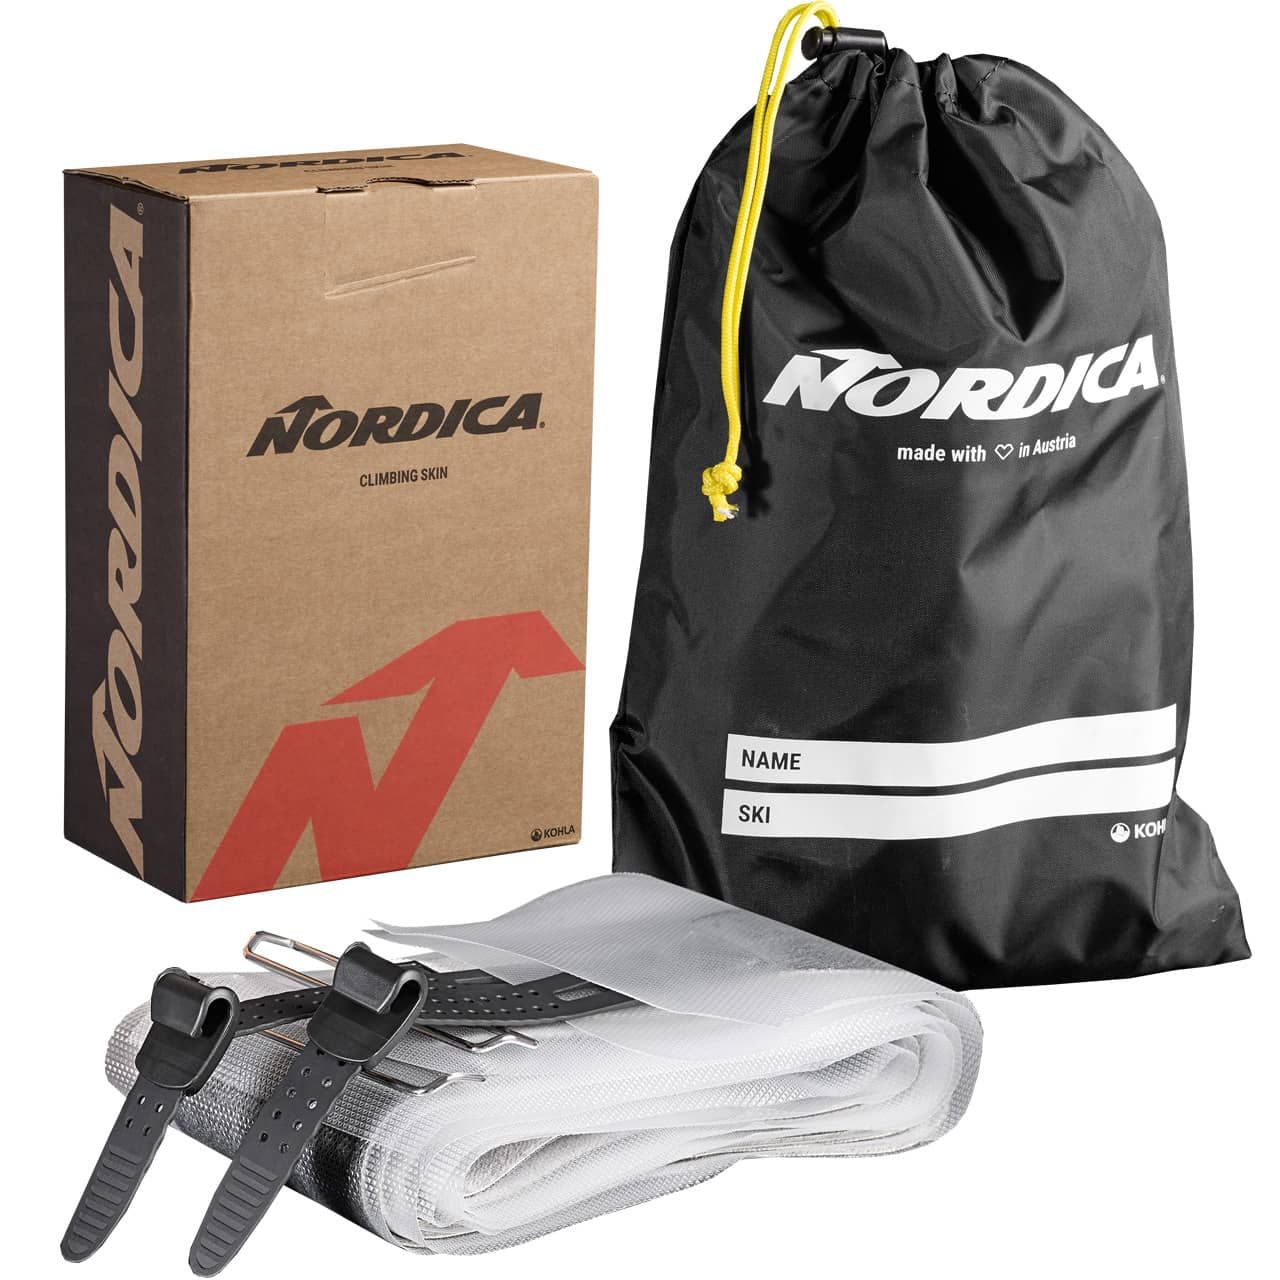 Nordica Skin Enforcer 94/Santa Ana 93 von NORDICA